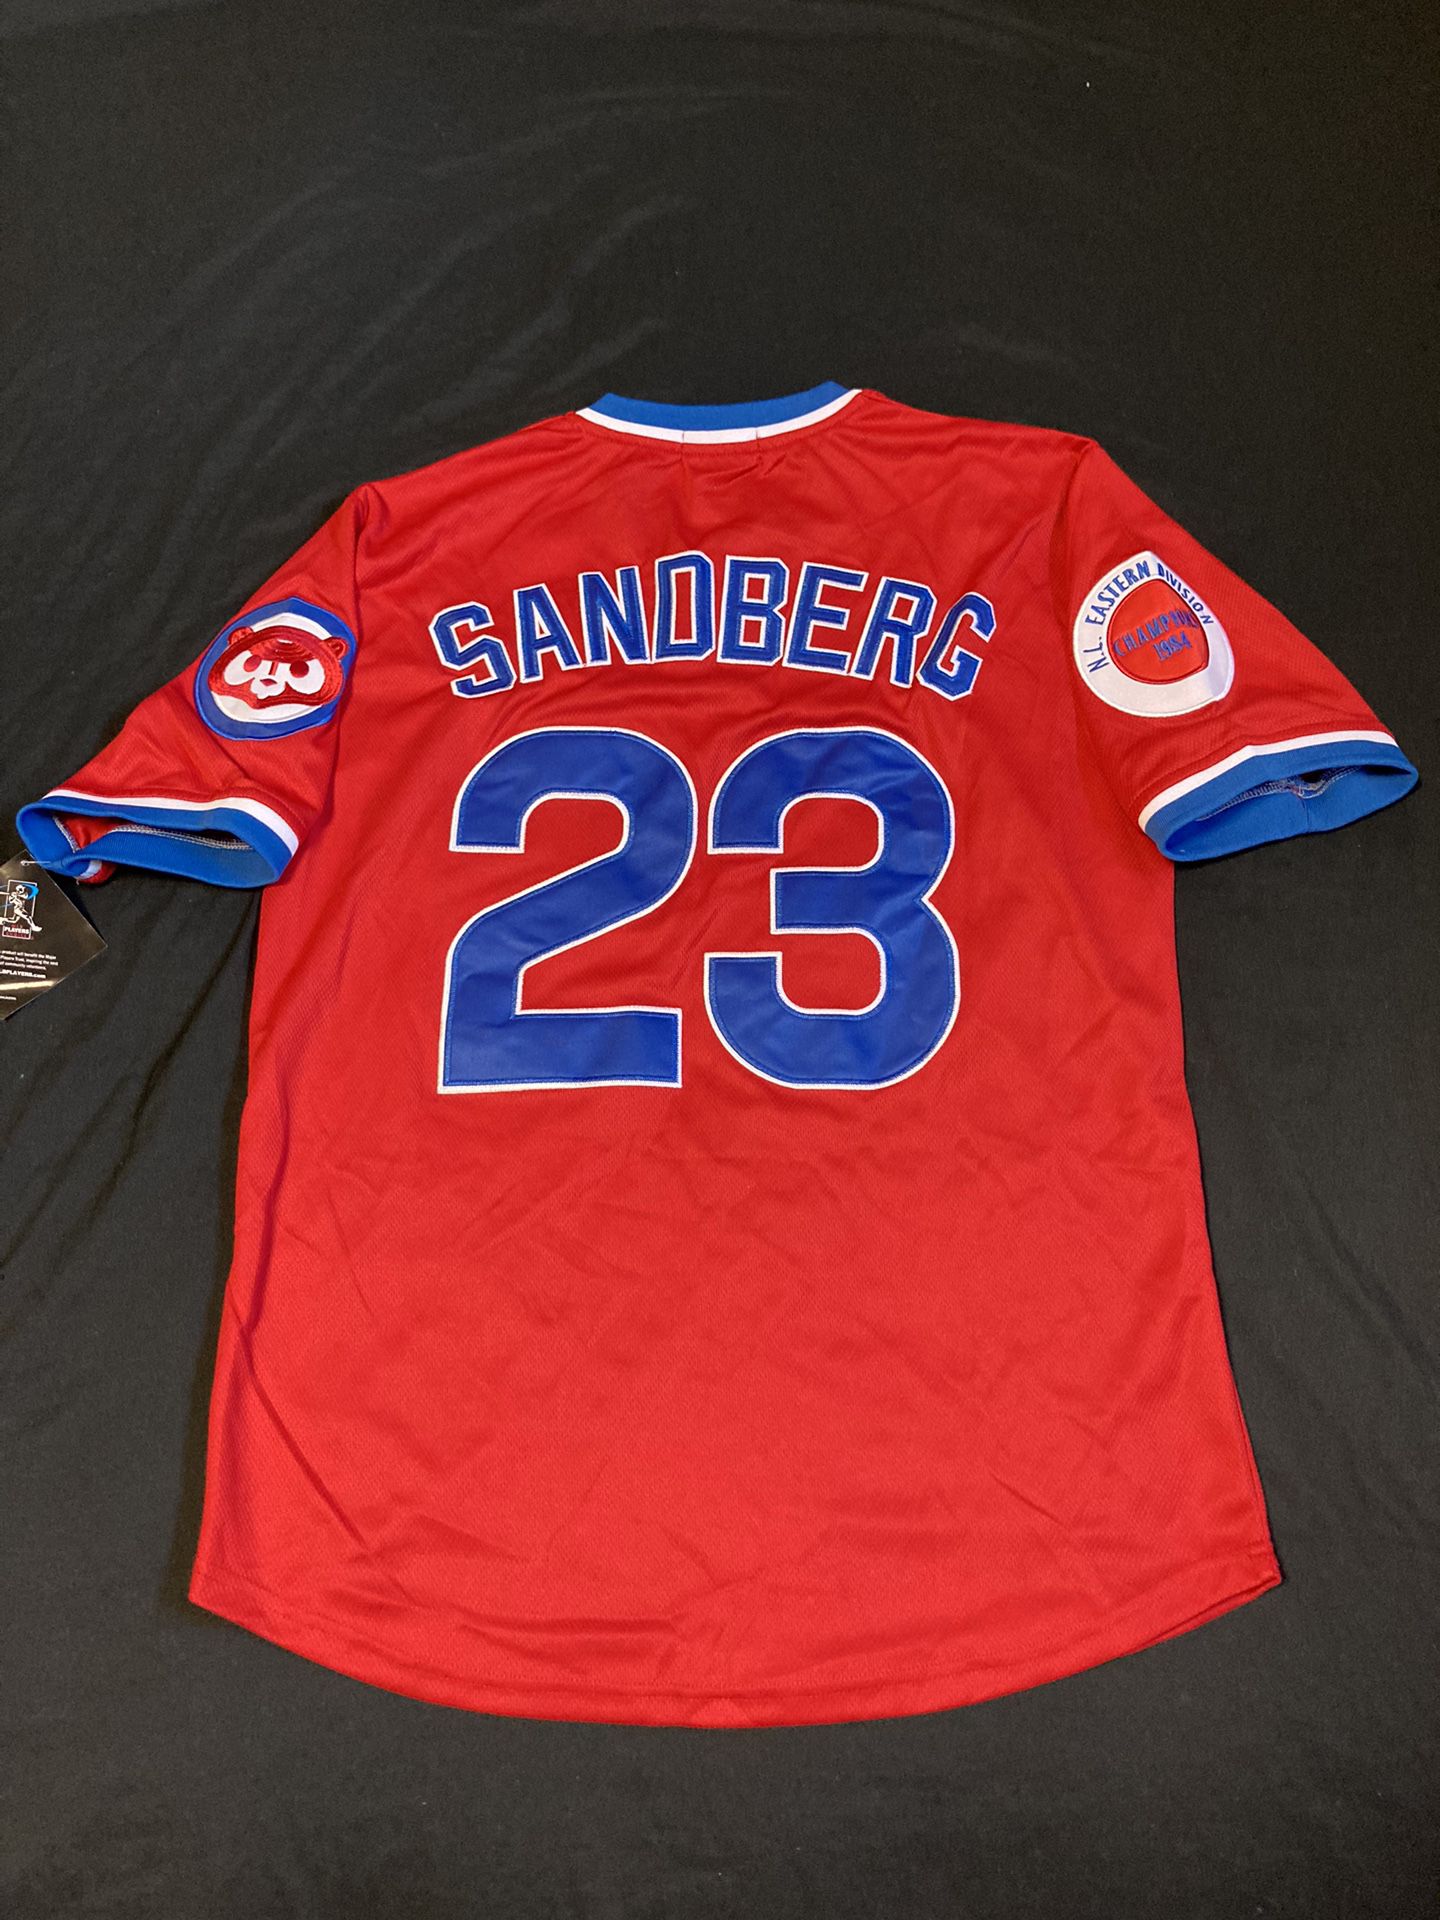 Cubs Sandberg ‘84 Jersey